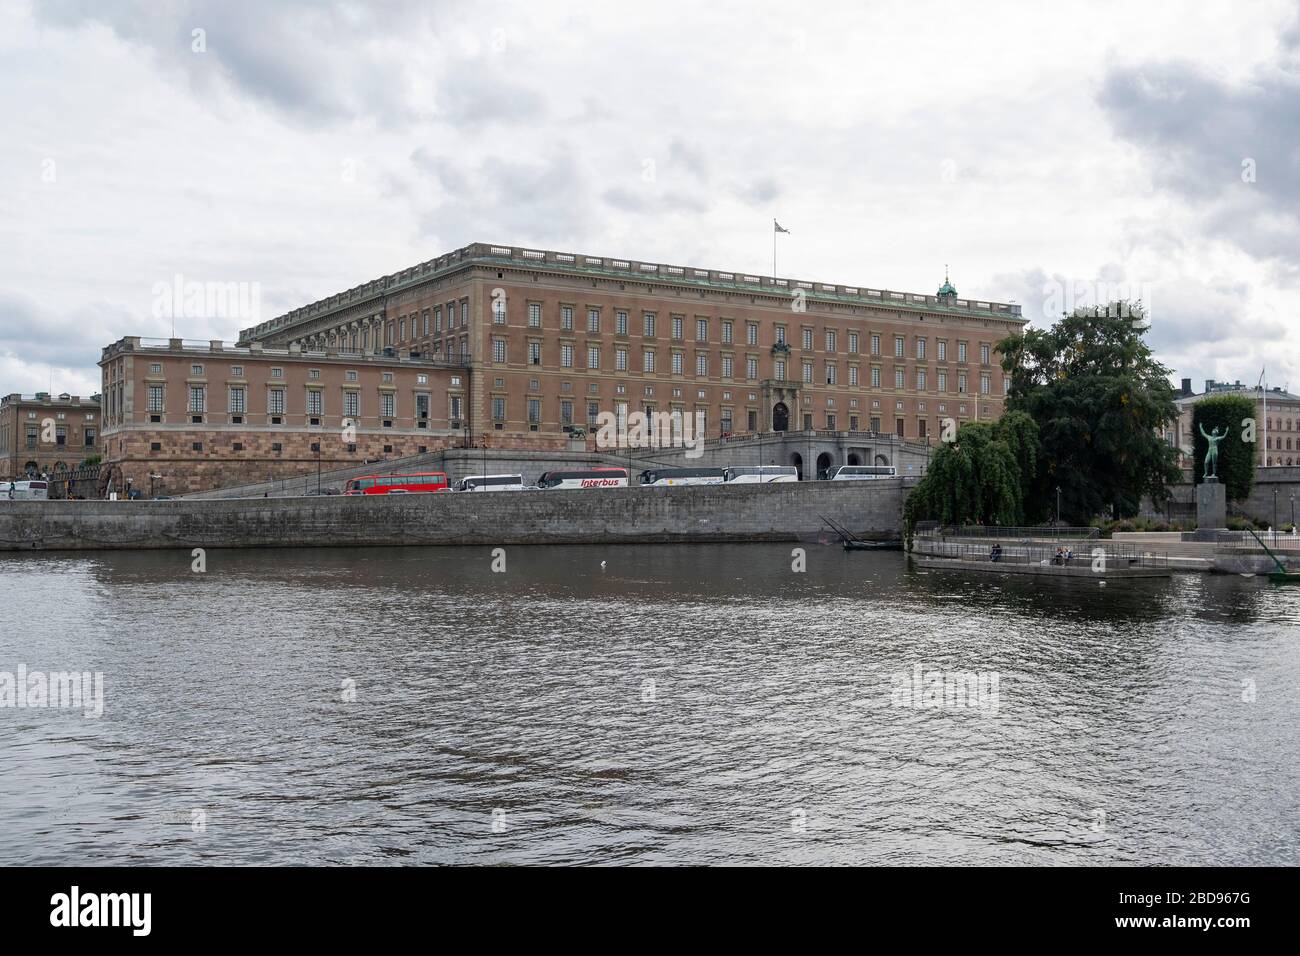 Stockholm Royal Palace, Stockholm, Sweden, Europe Stock Photo